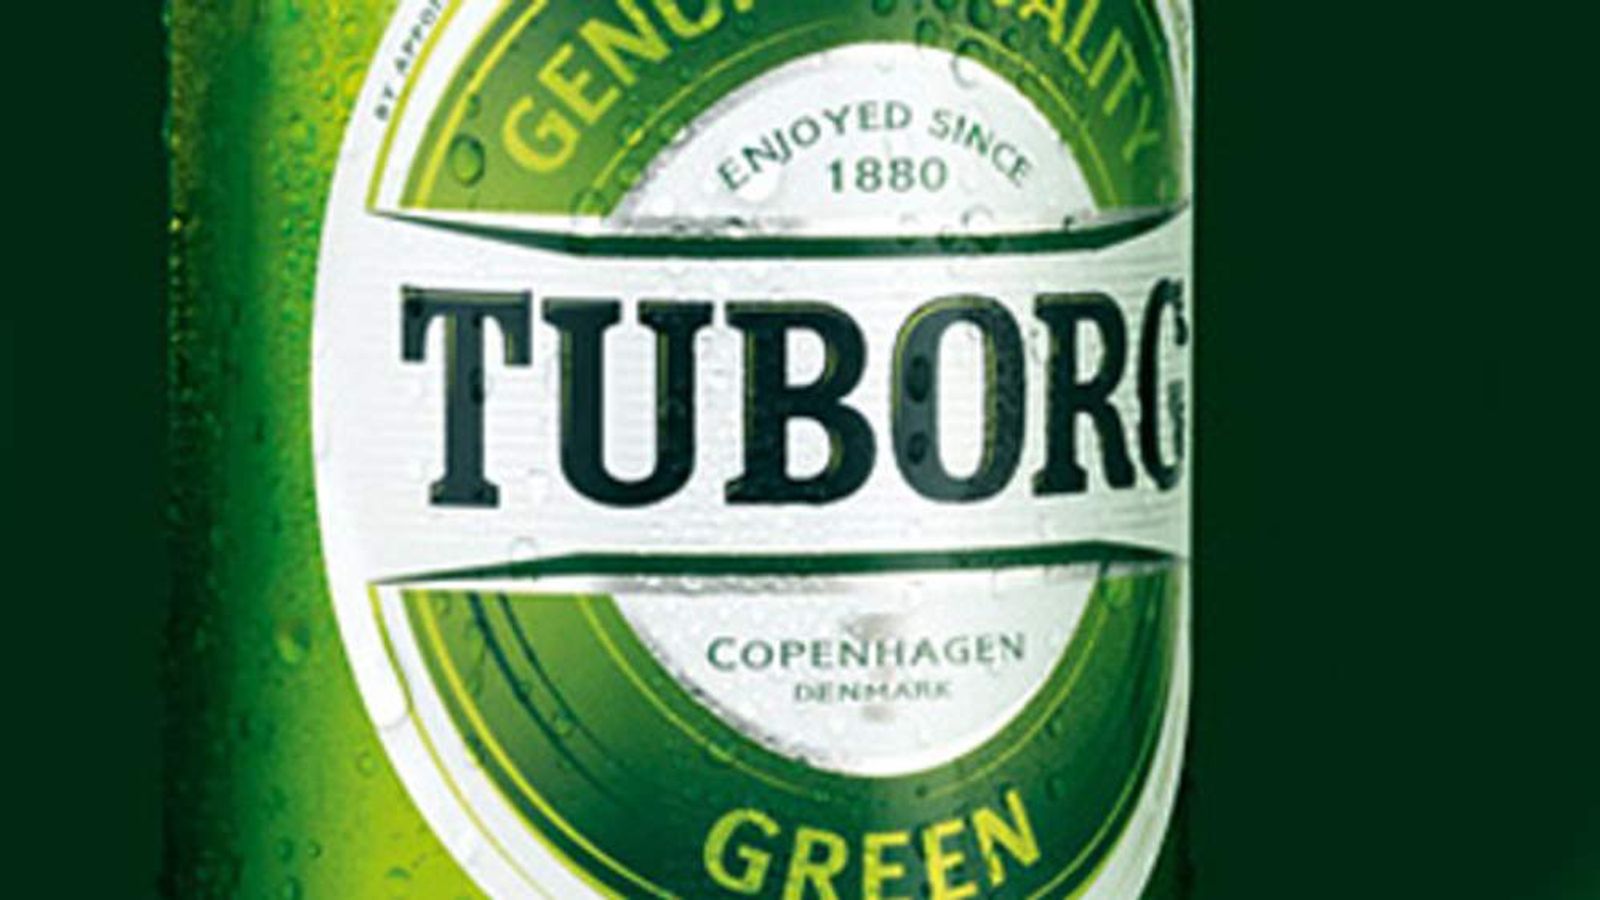 Tuborg Beer Bottles Recalled Over Glass Fears | Business News | Sky News